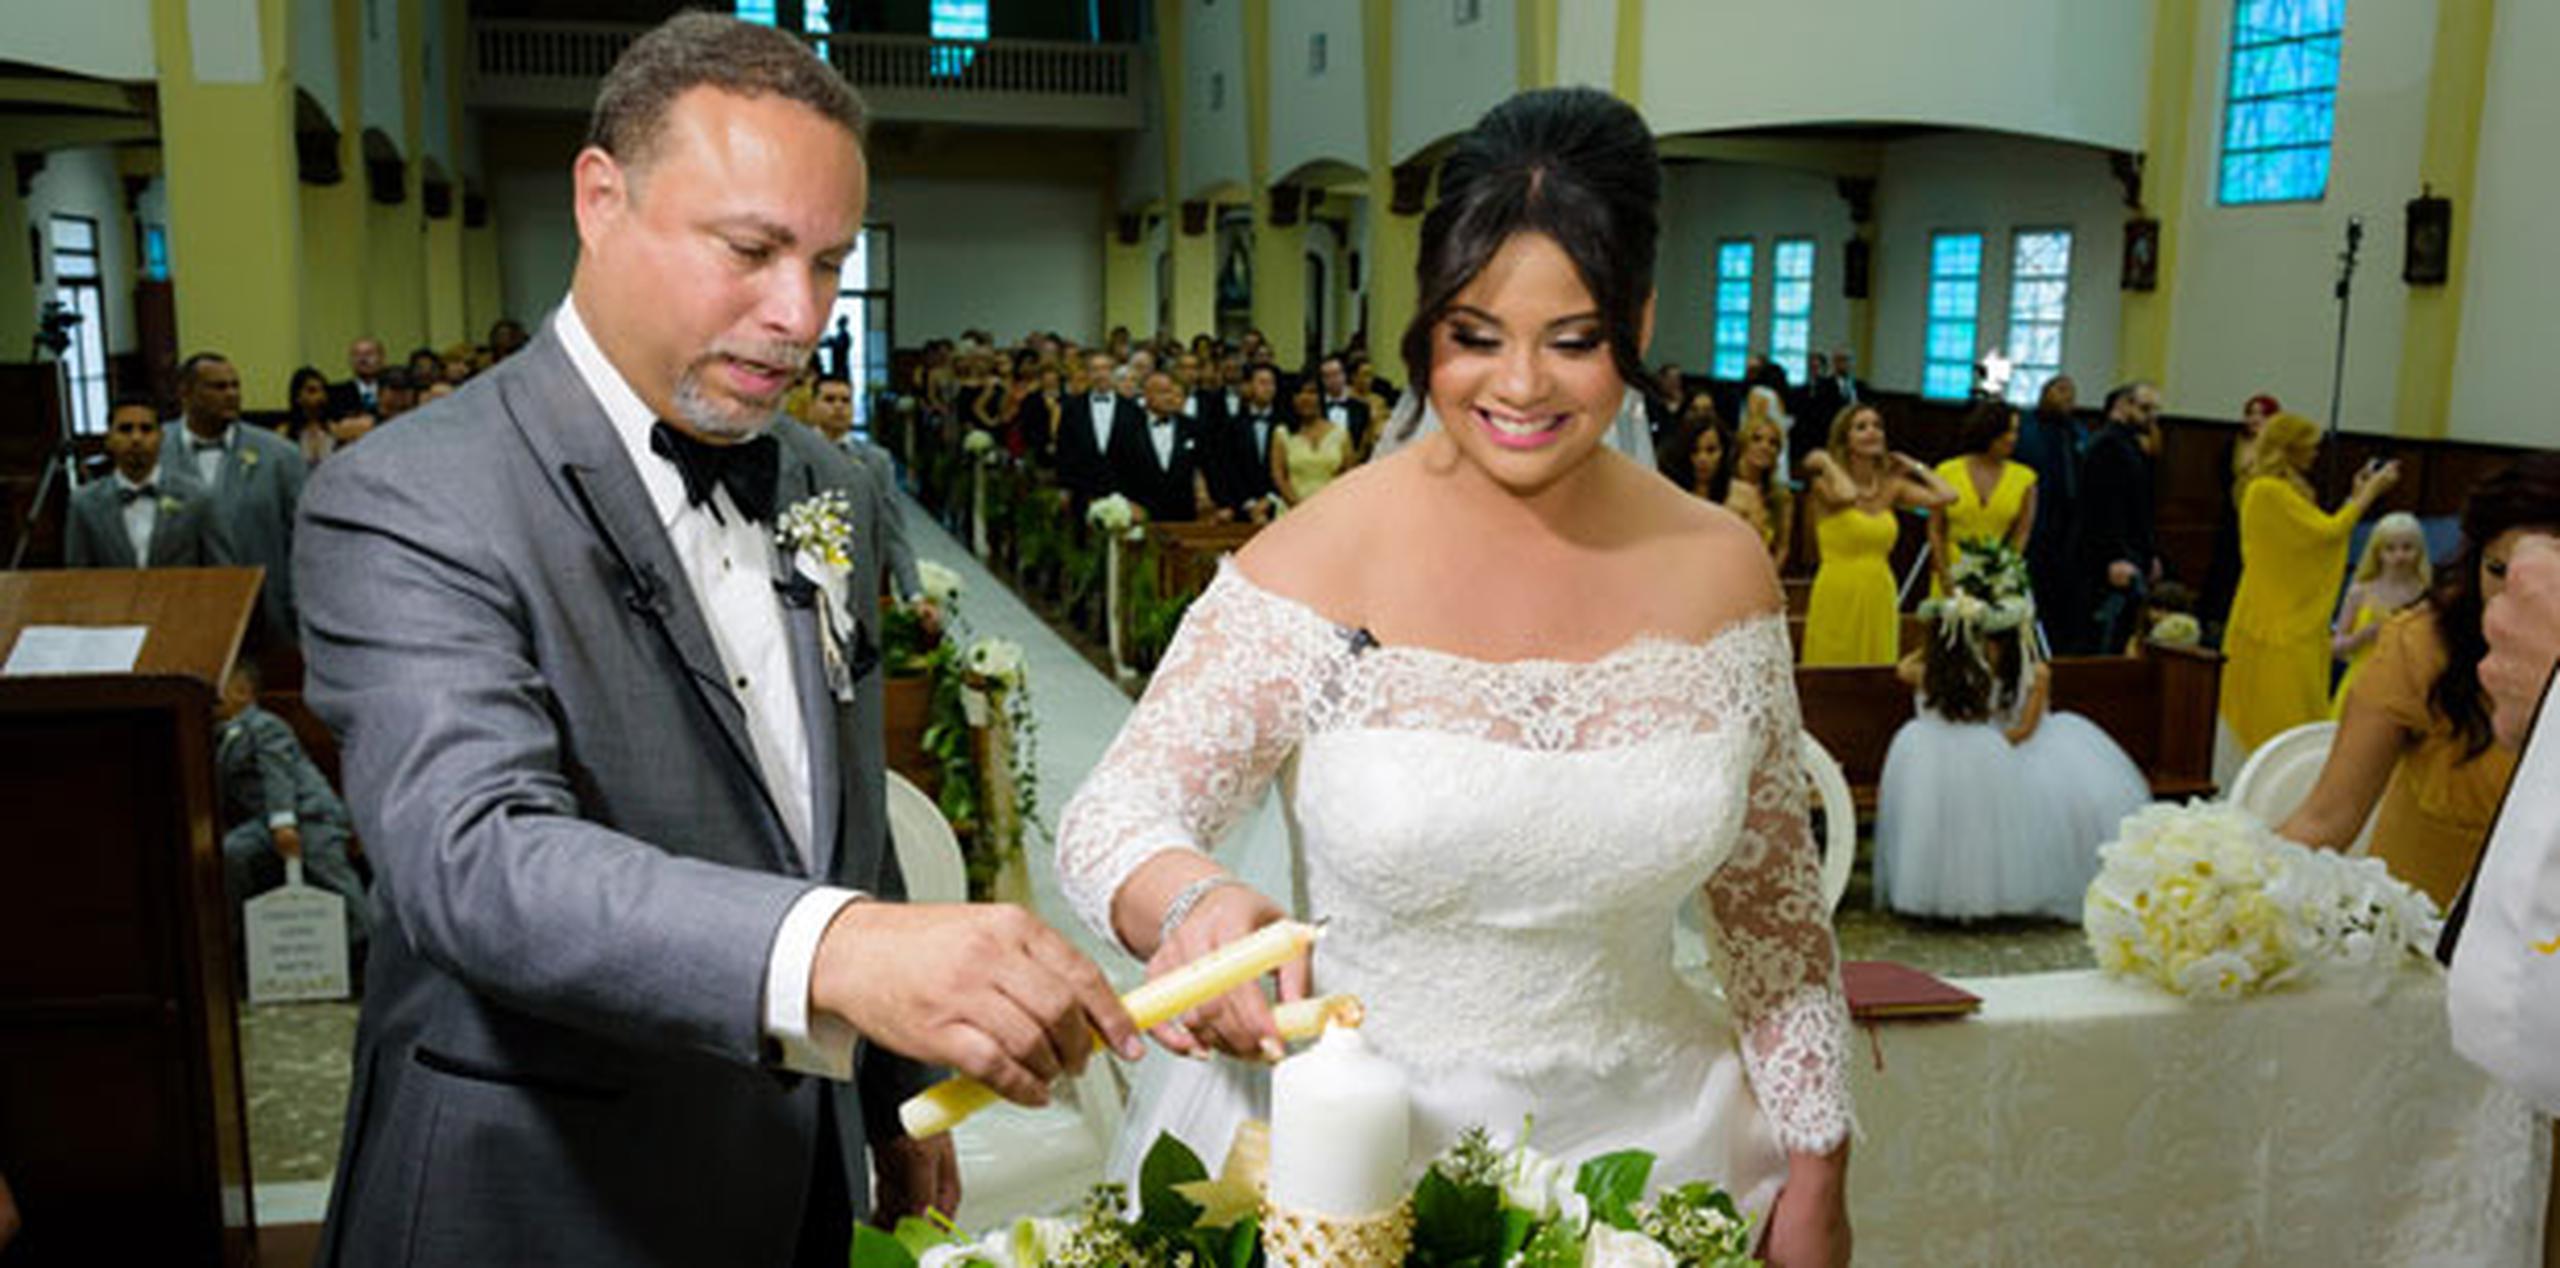 La periodista Biankah Sobá y Eduardo Ramírez contrajeron matrimonio ayer, sábado. (Suministradas)